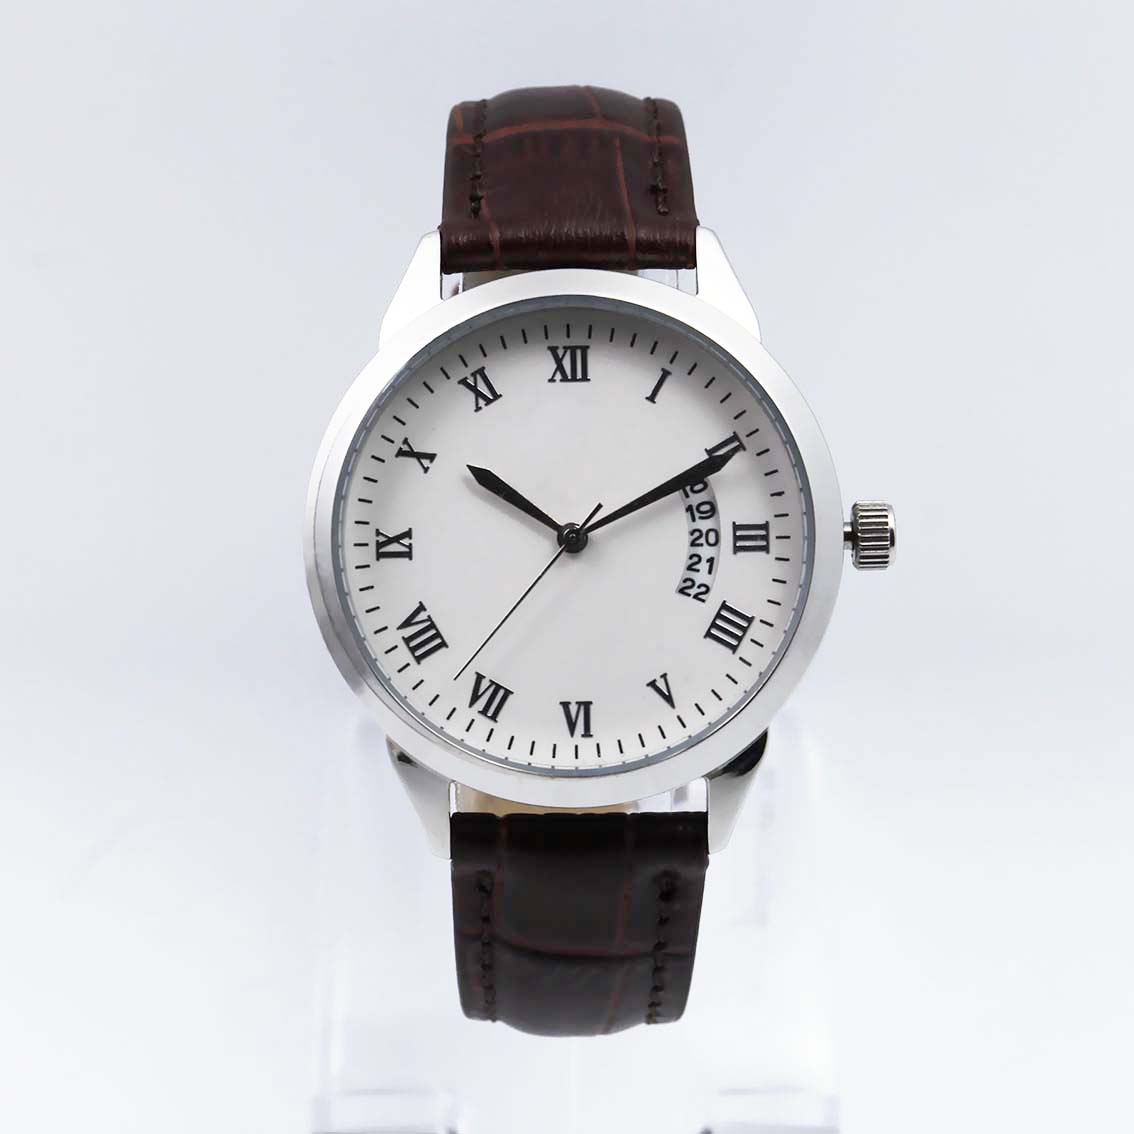 #02075Men's wristwatch quartz analog leather strap watch